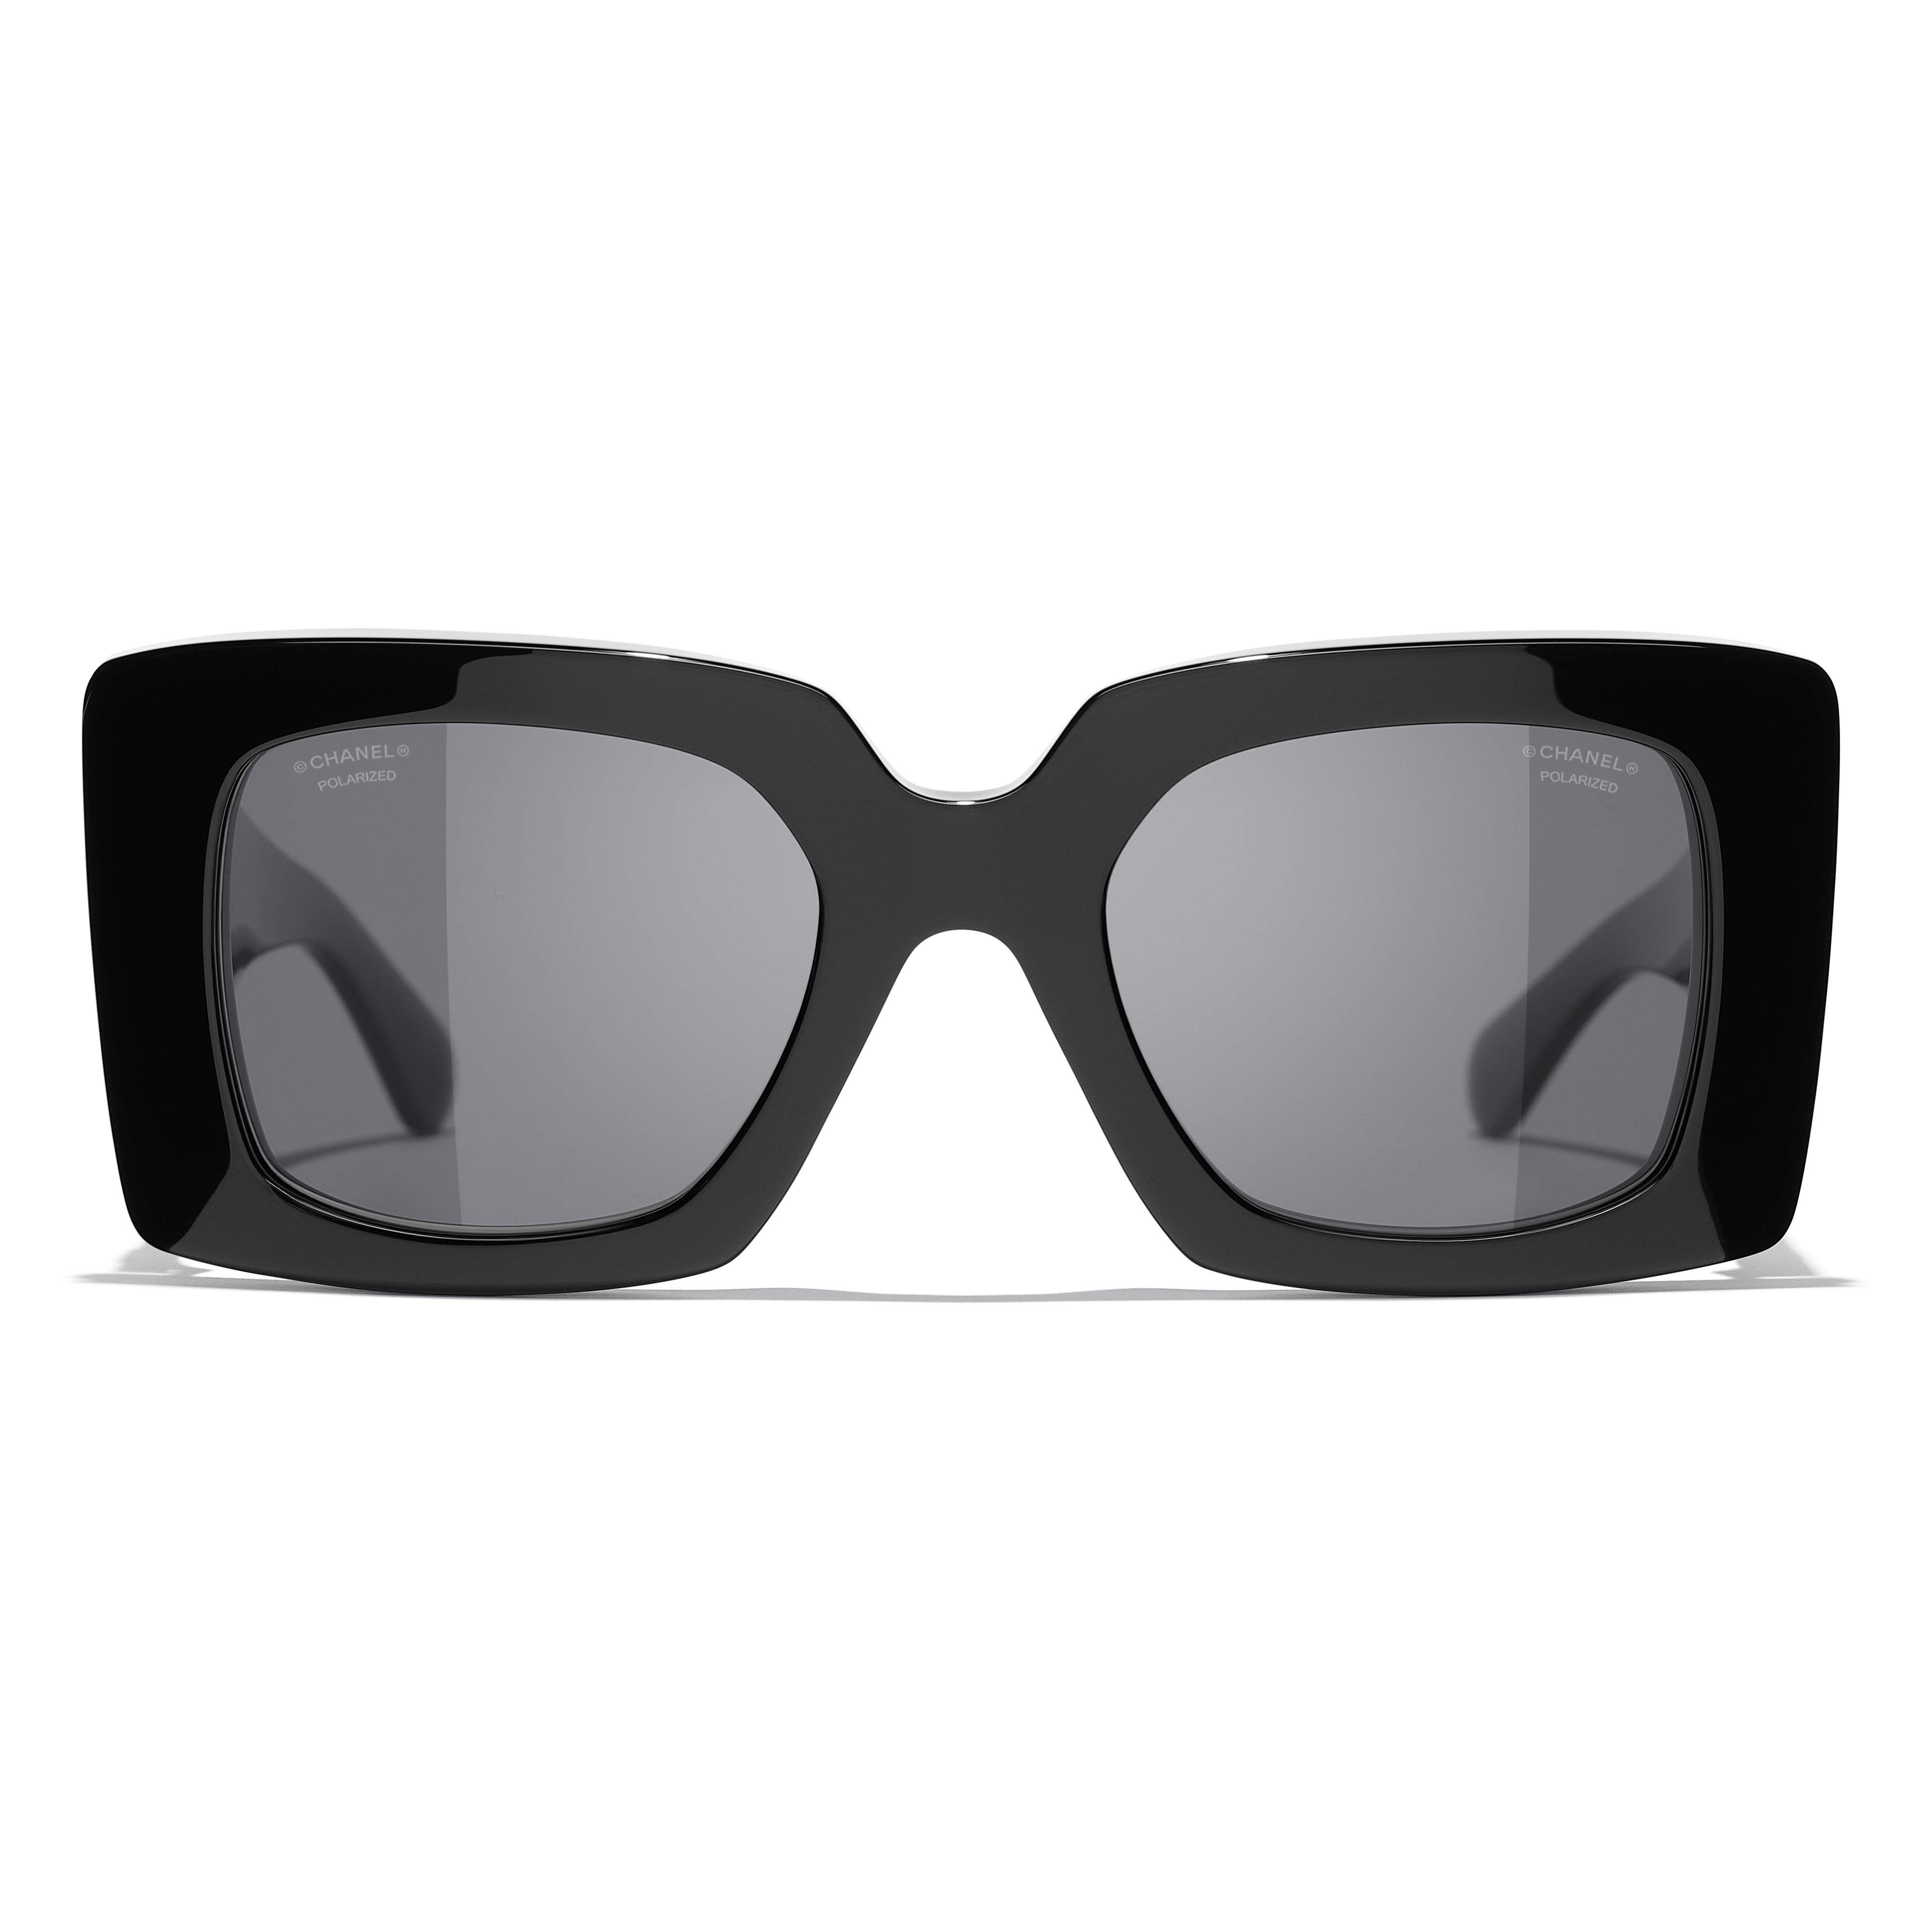 CHANEL Irregular Sunglasses CH5429 BlackGrey Gradient at John Lewis   Partners